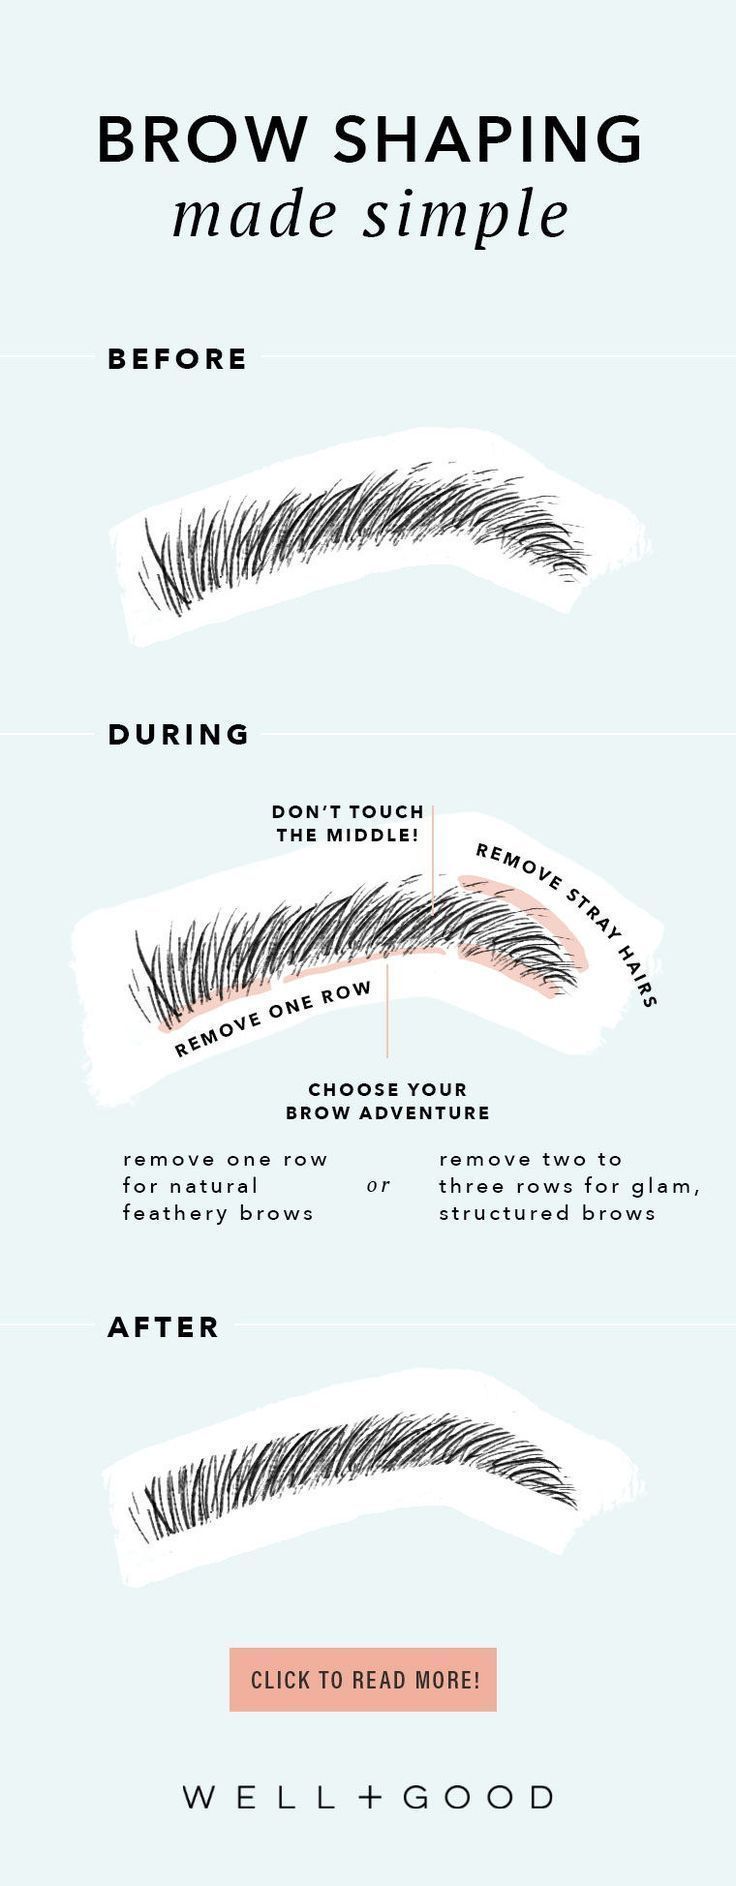 17 beauty Hacks eyebrows ideas